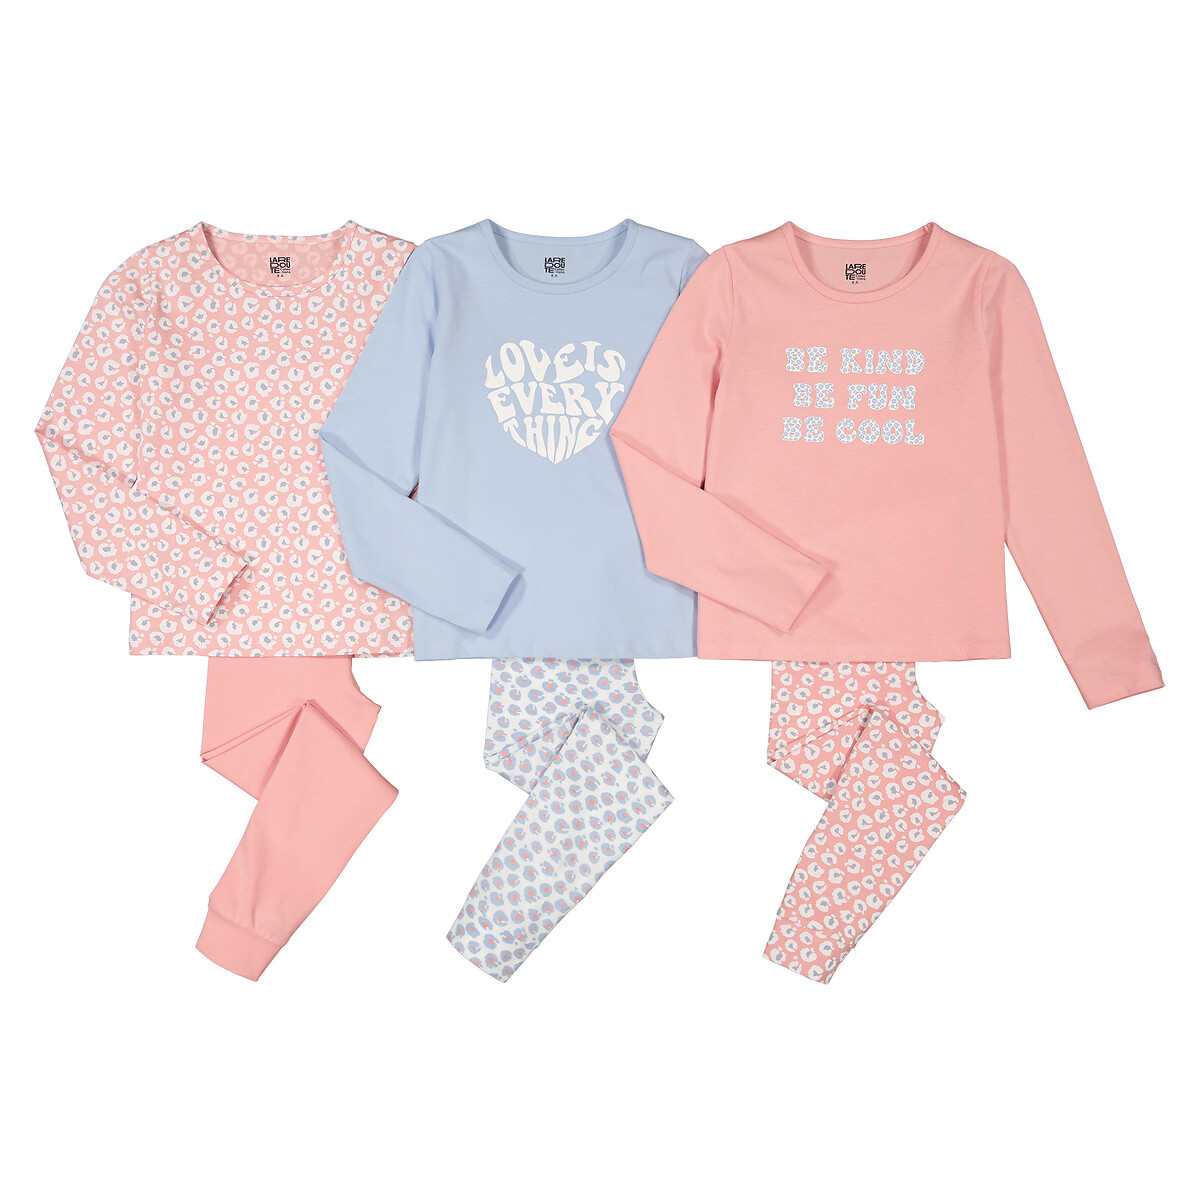 Pack of 3 Pyjamas in Leopard Print Cotton